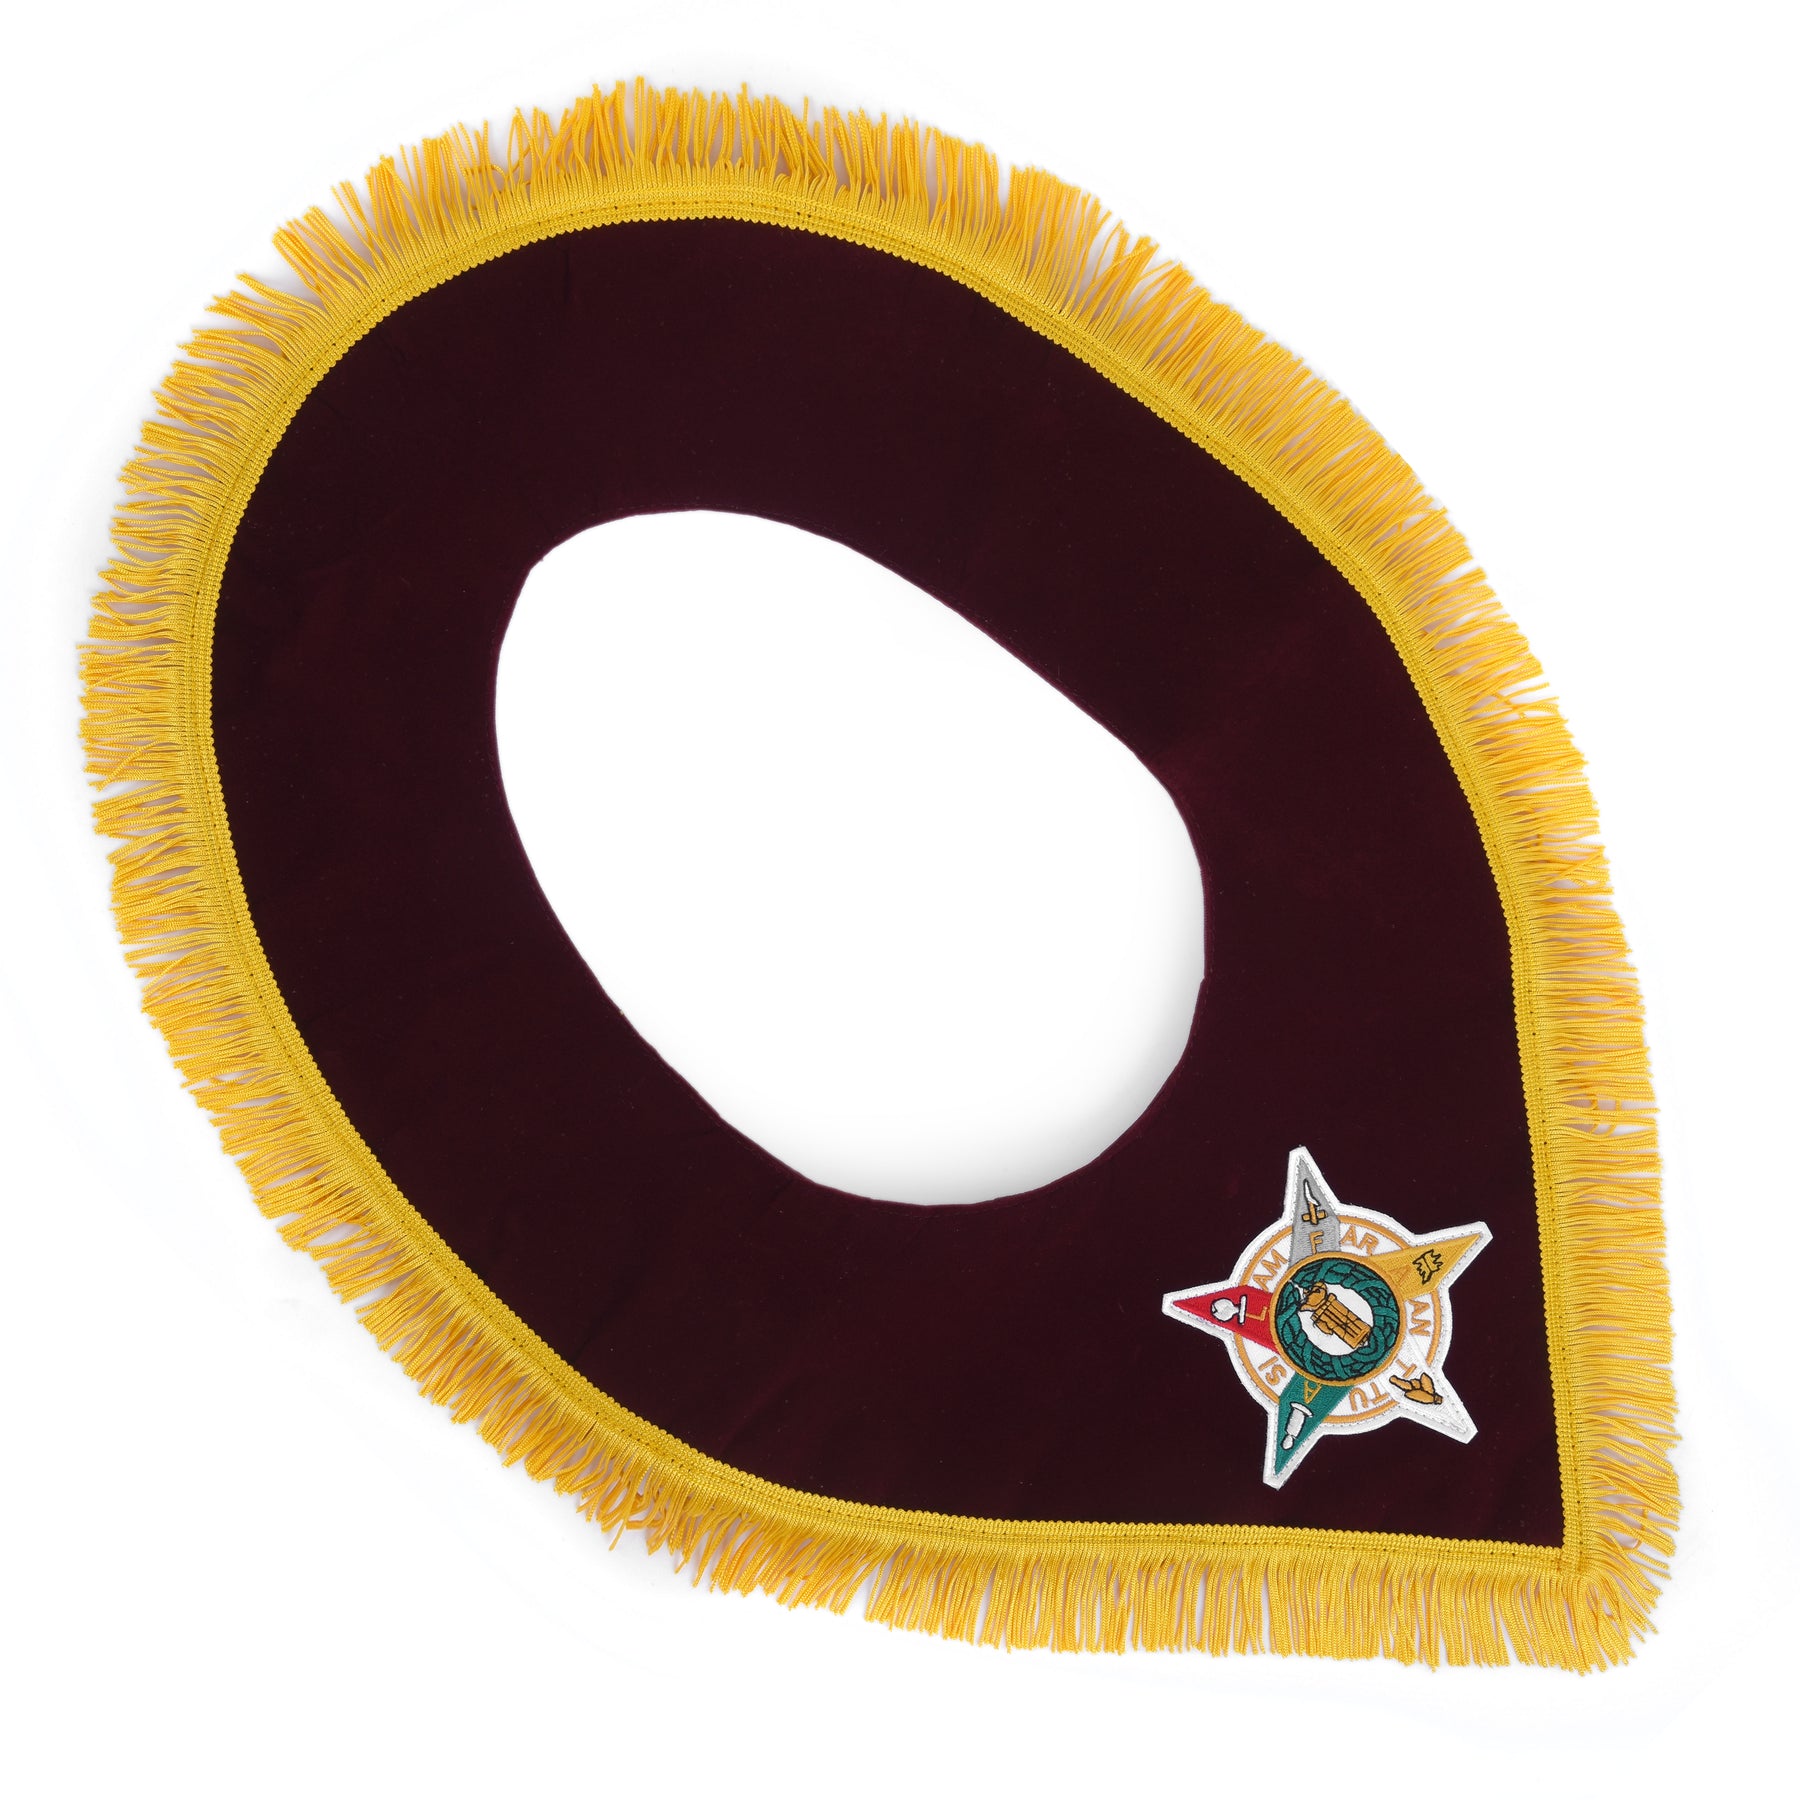 Order of Amaranth Collar - Maroon Velvet With Yellow Braid & Fringe - Bricks Masons